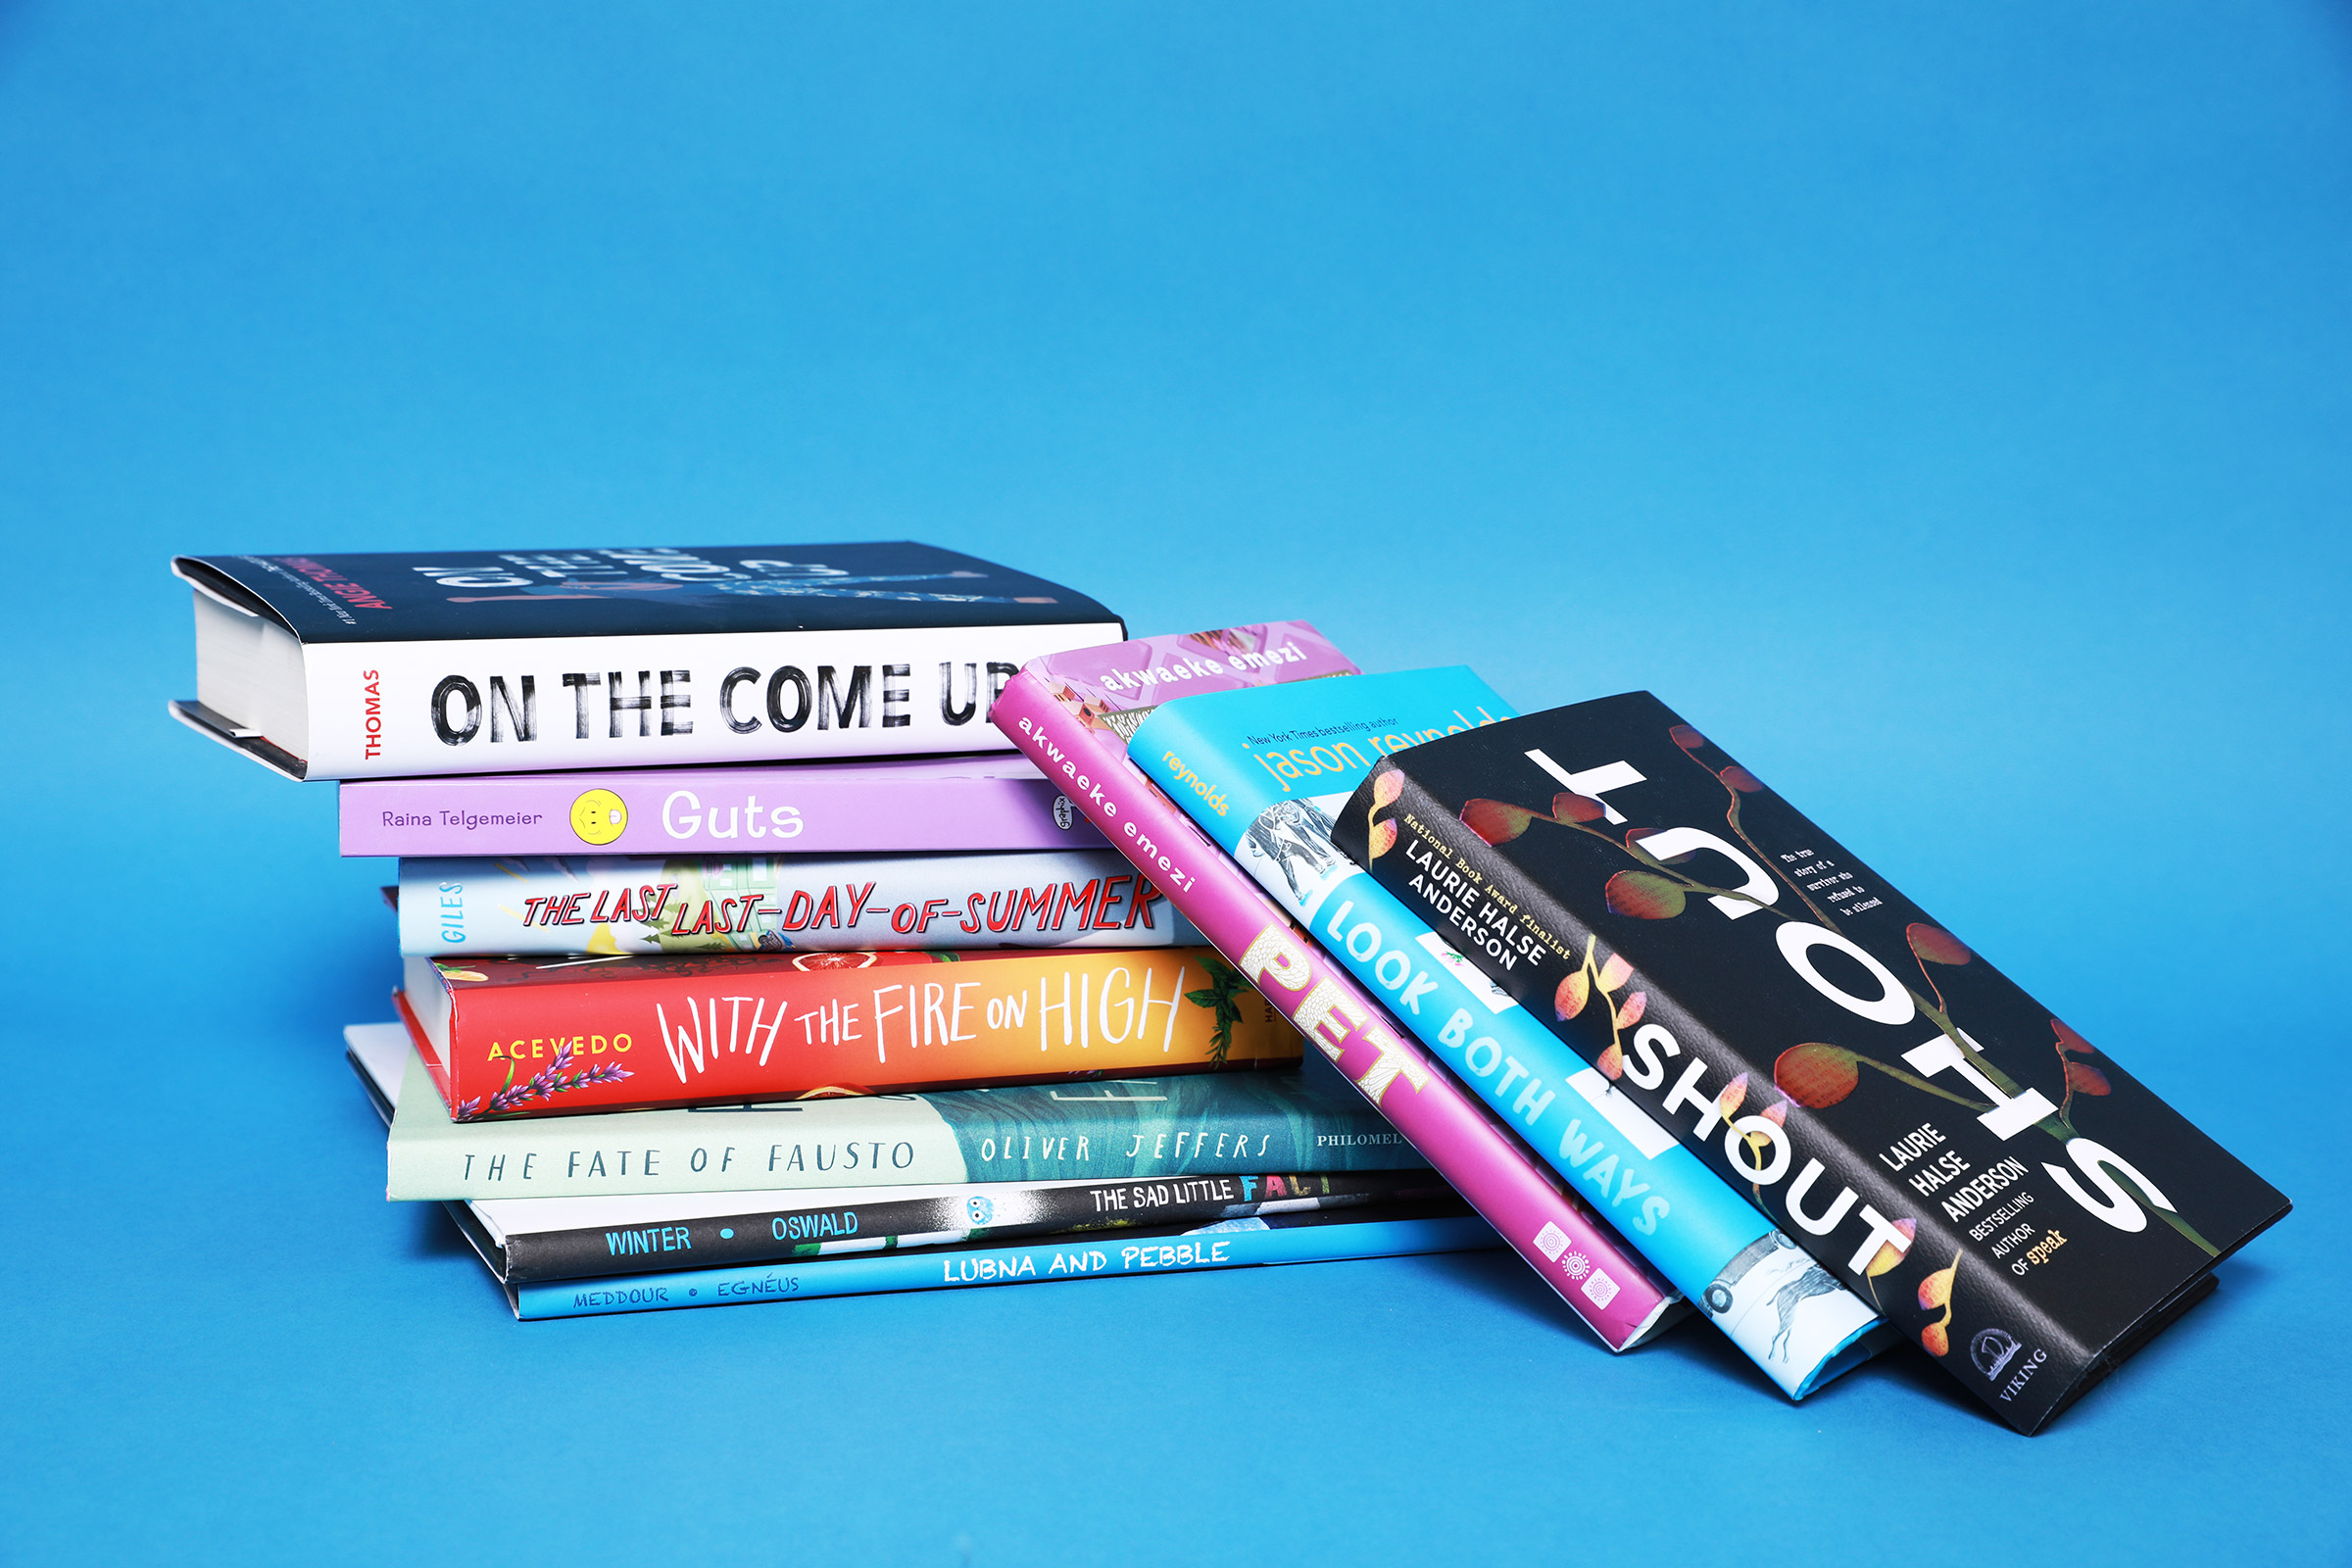 Best Books & Book Series For 6-7 Year Olds: Zoya's Picks! – Kids Book Café